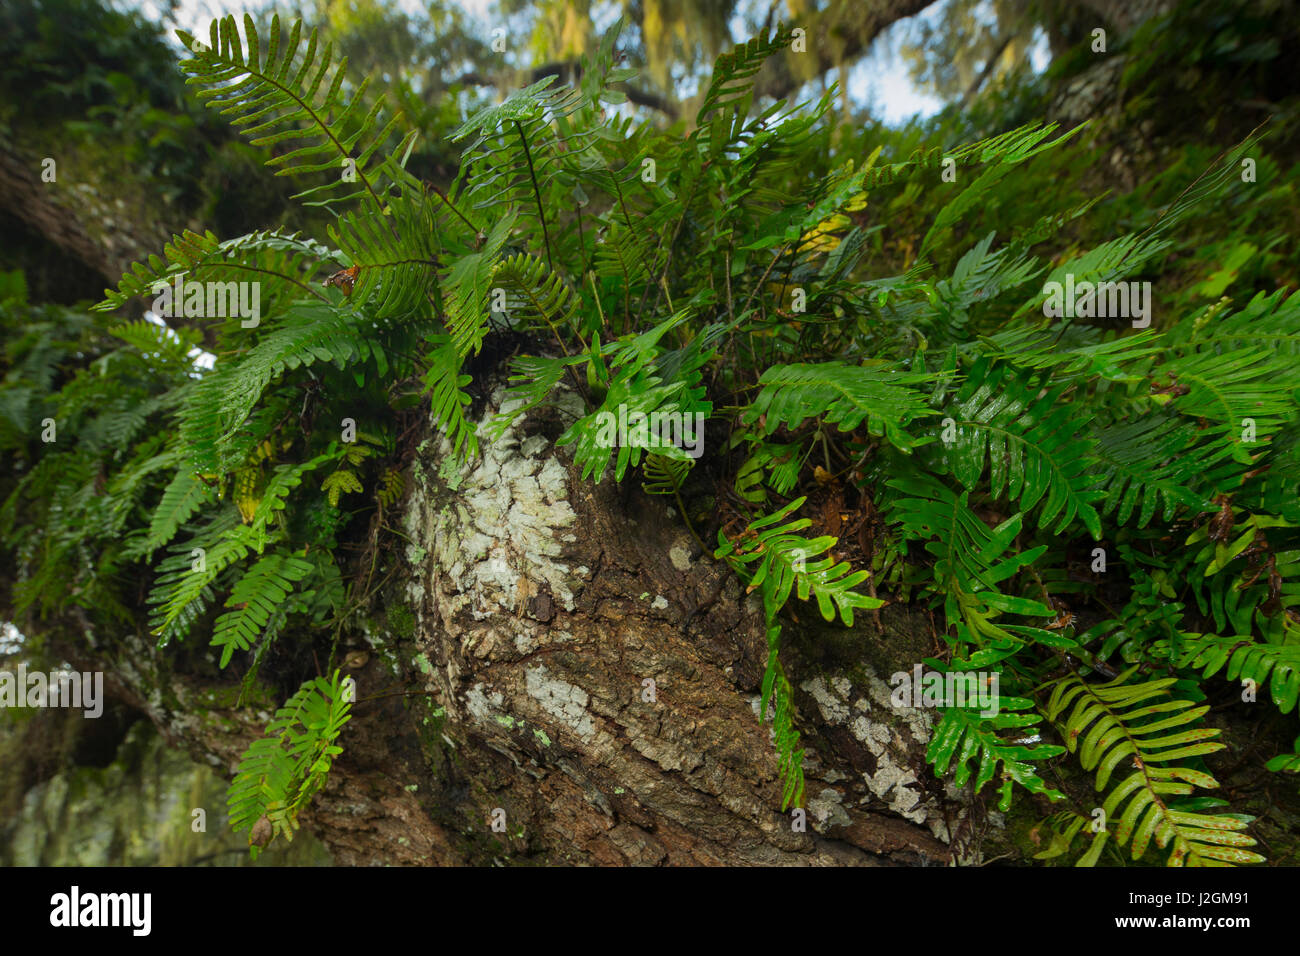 Resurrection fern, Pleopeltis polypodioides, Floride Banque D'Images